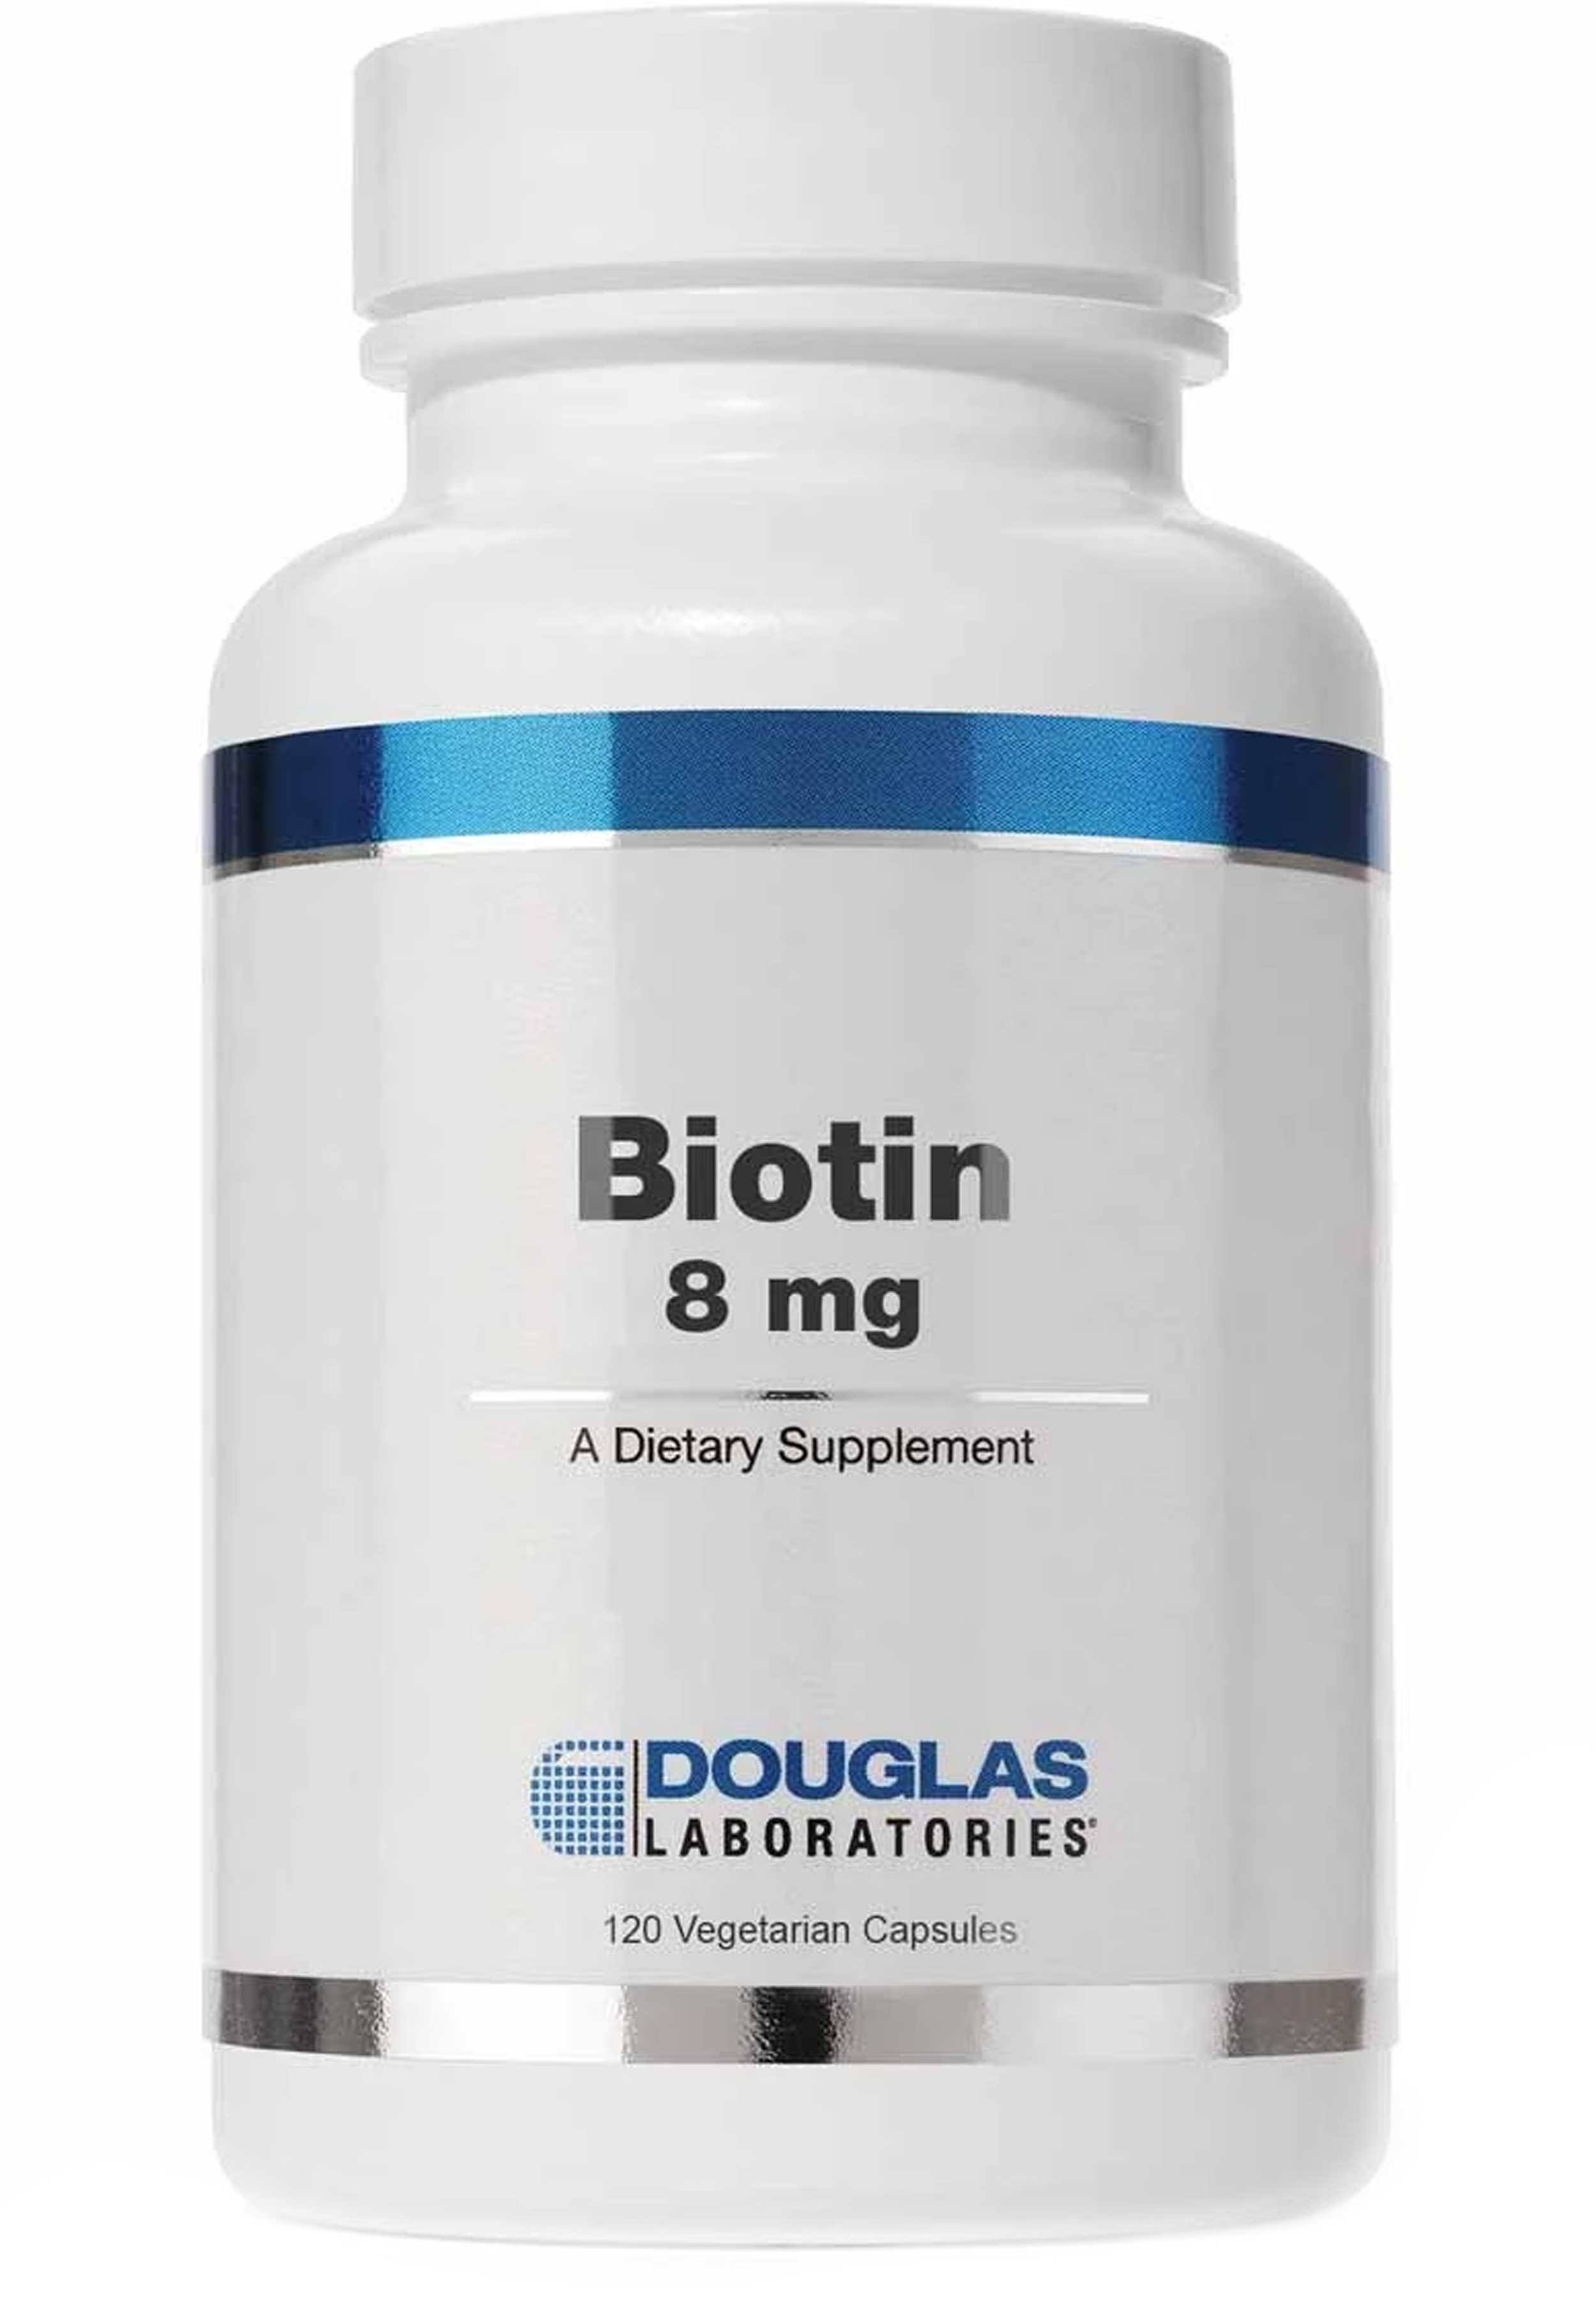 Douglas Laboratories - Biotin 8 mg - 120 Capsules